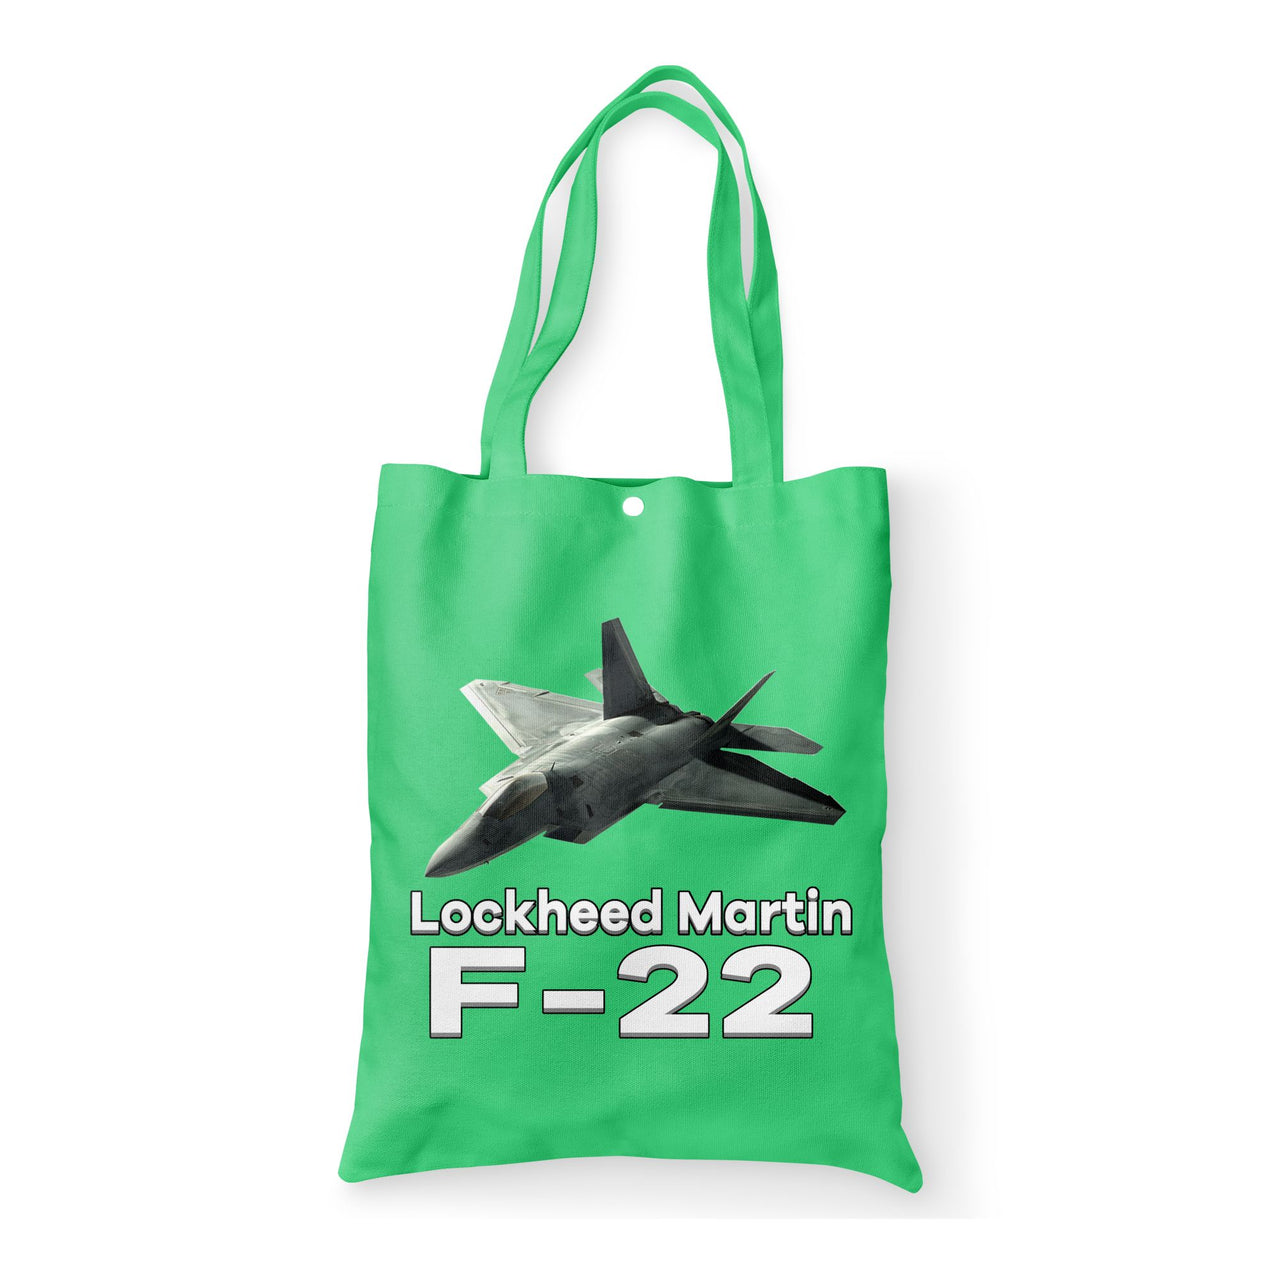 The Lockheed Martin F22 Designed Tote Bags